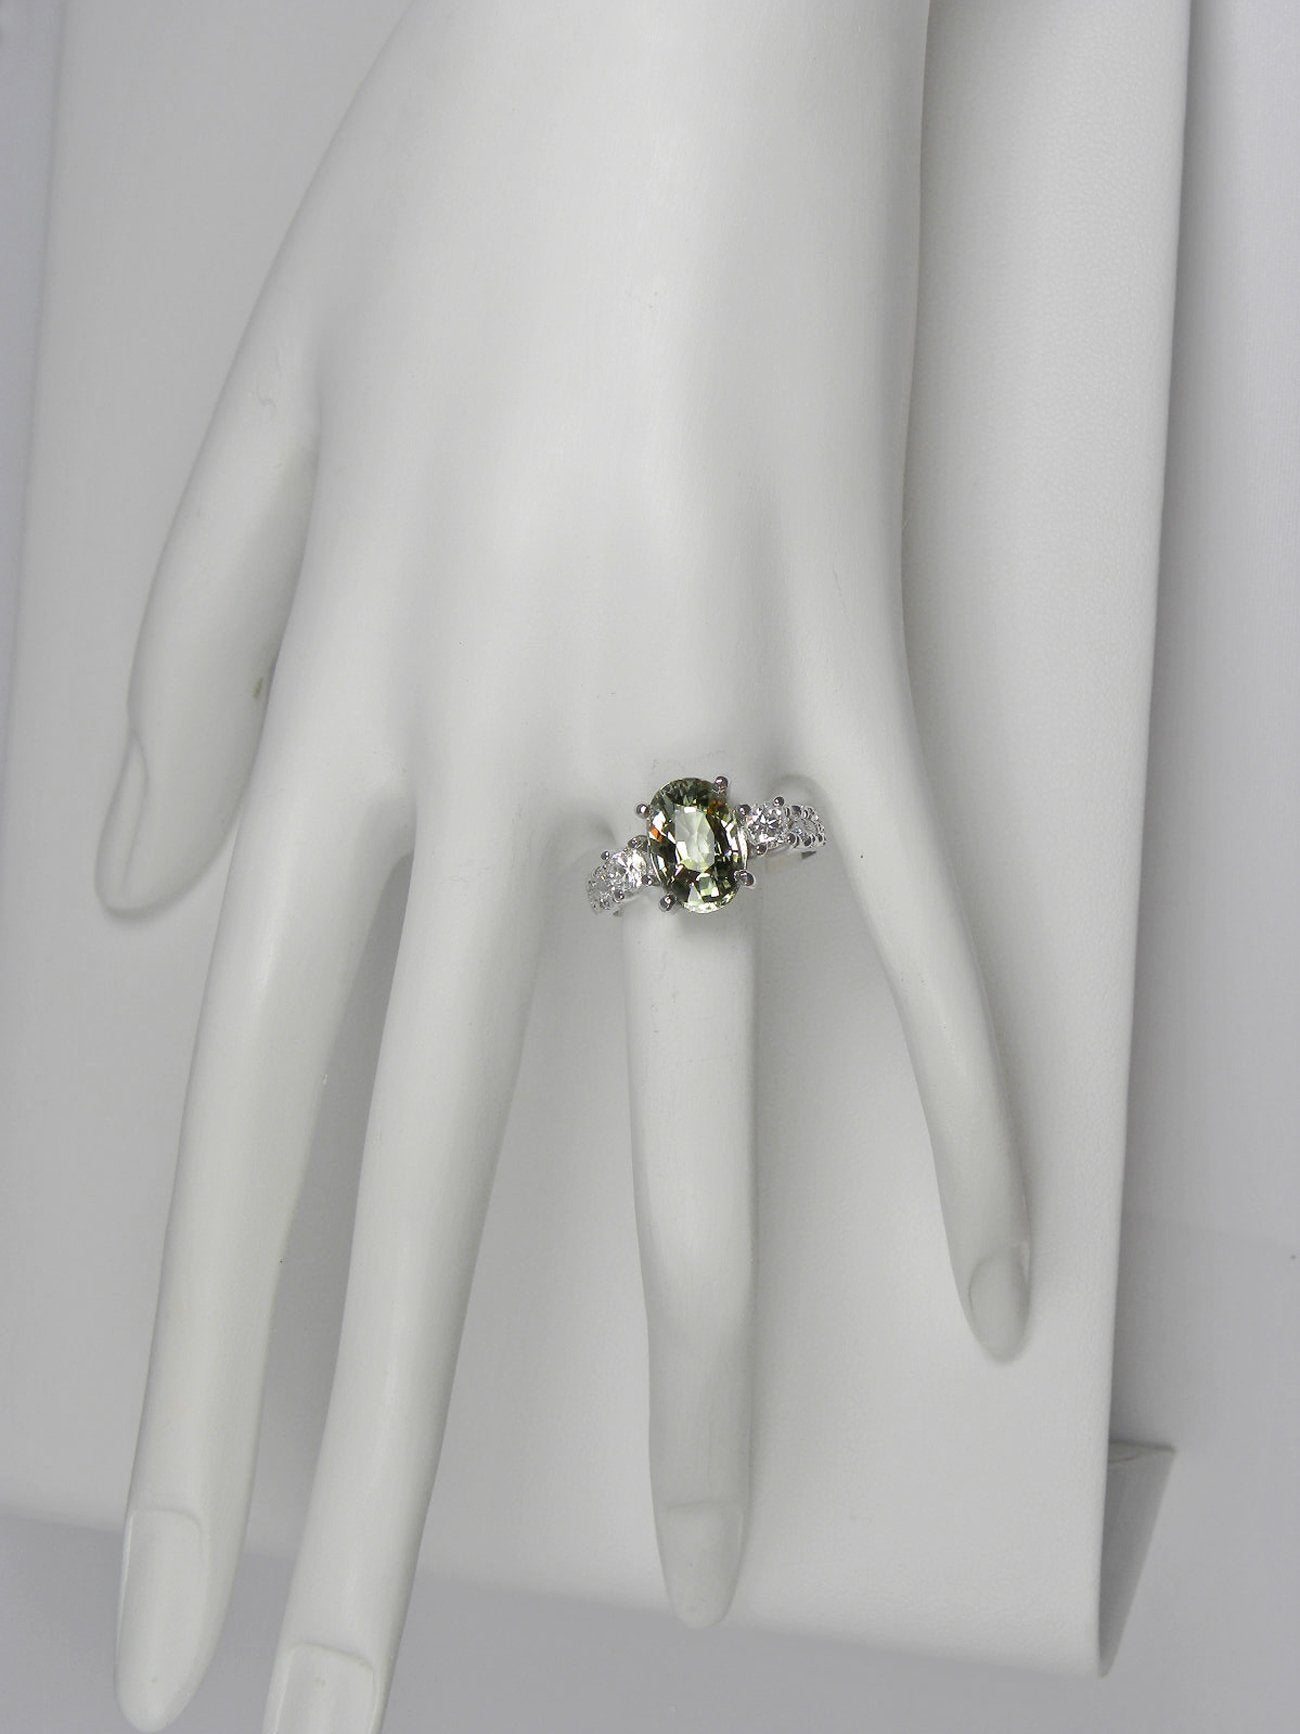 Certified Sapphire & Diamond Fine Engagement Ring 18k White Gold